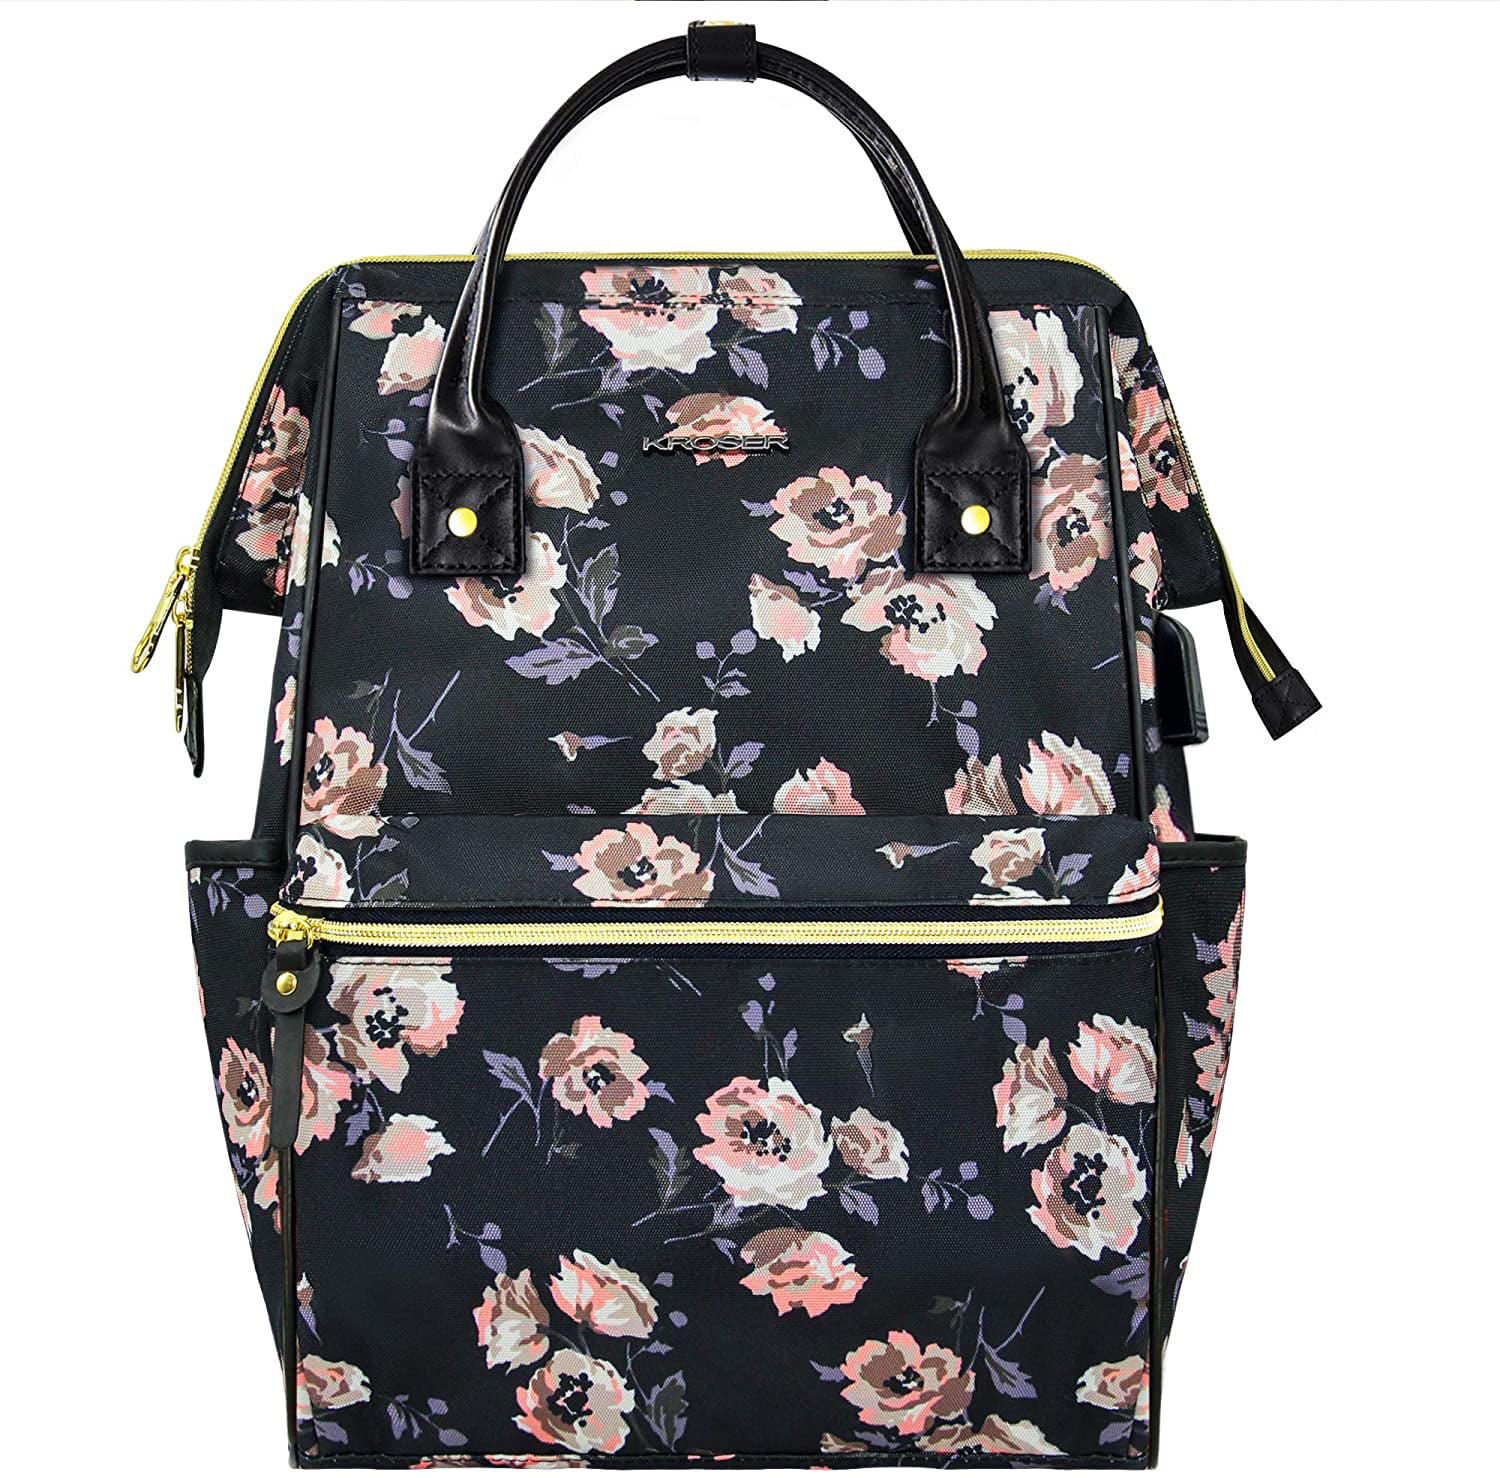 MAPOLO Black and White Jagged Lines Texture School Backpack Travel Bag Rucksack College Bookbag Travel Laptop Bag Daypack Bag for Men Women